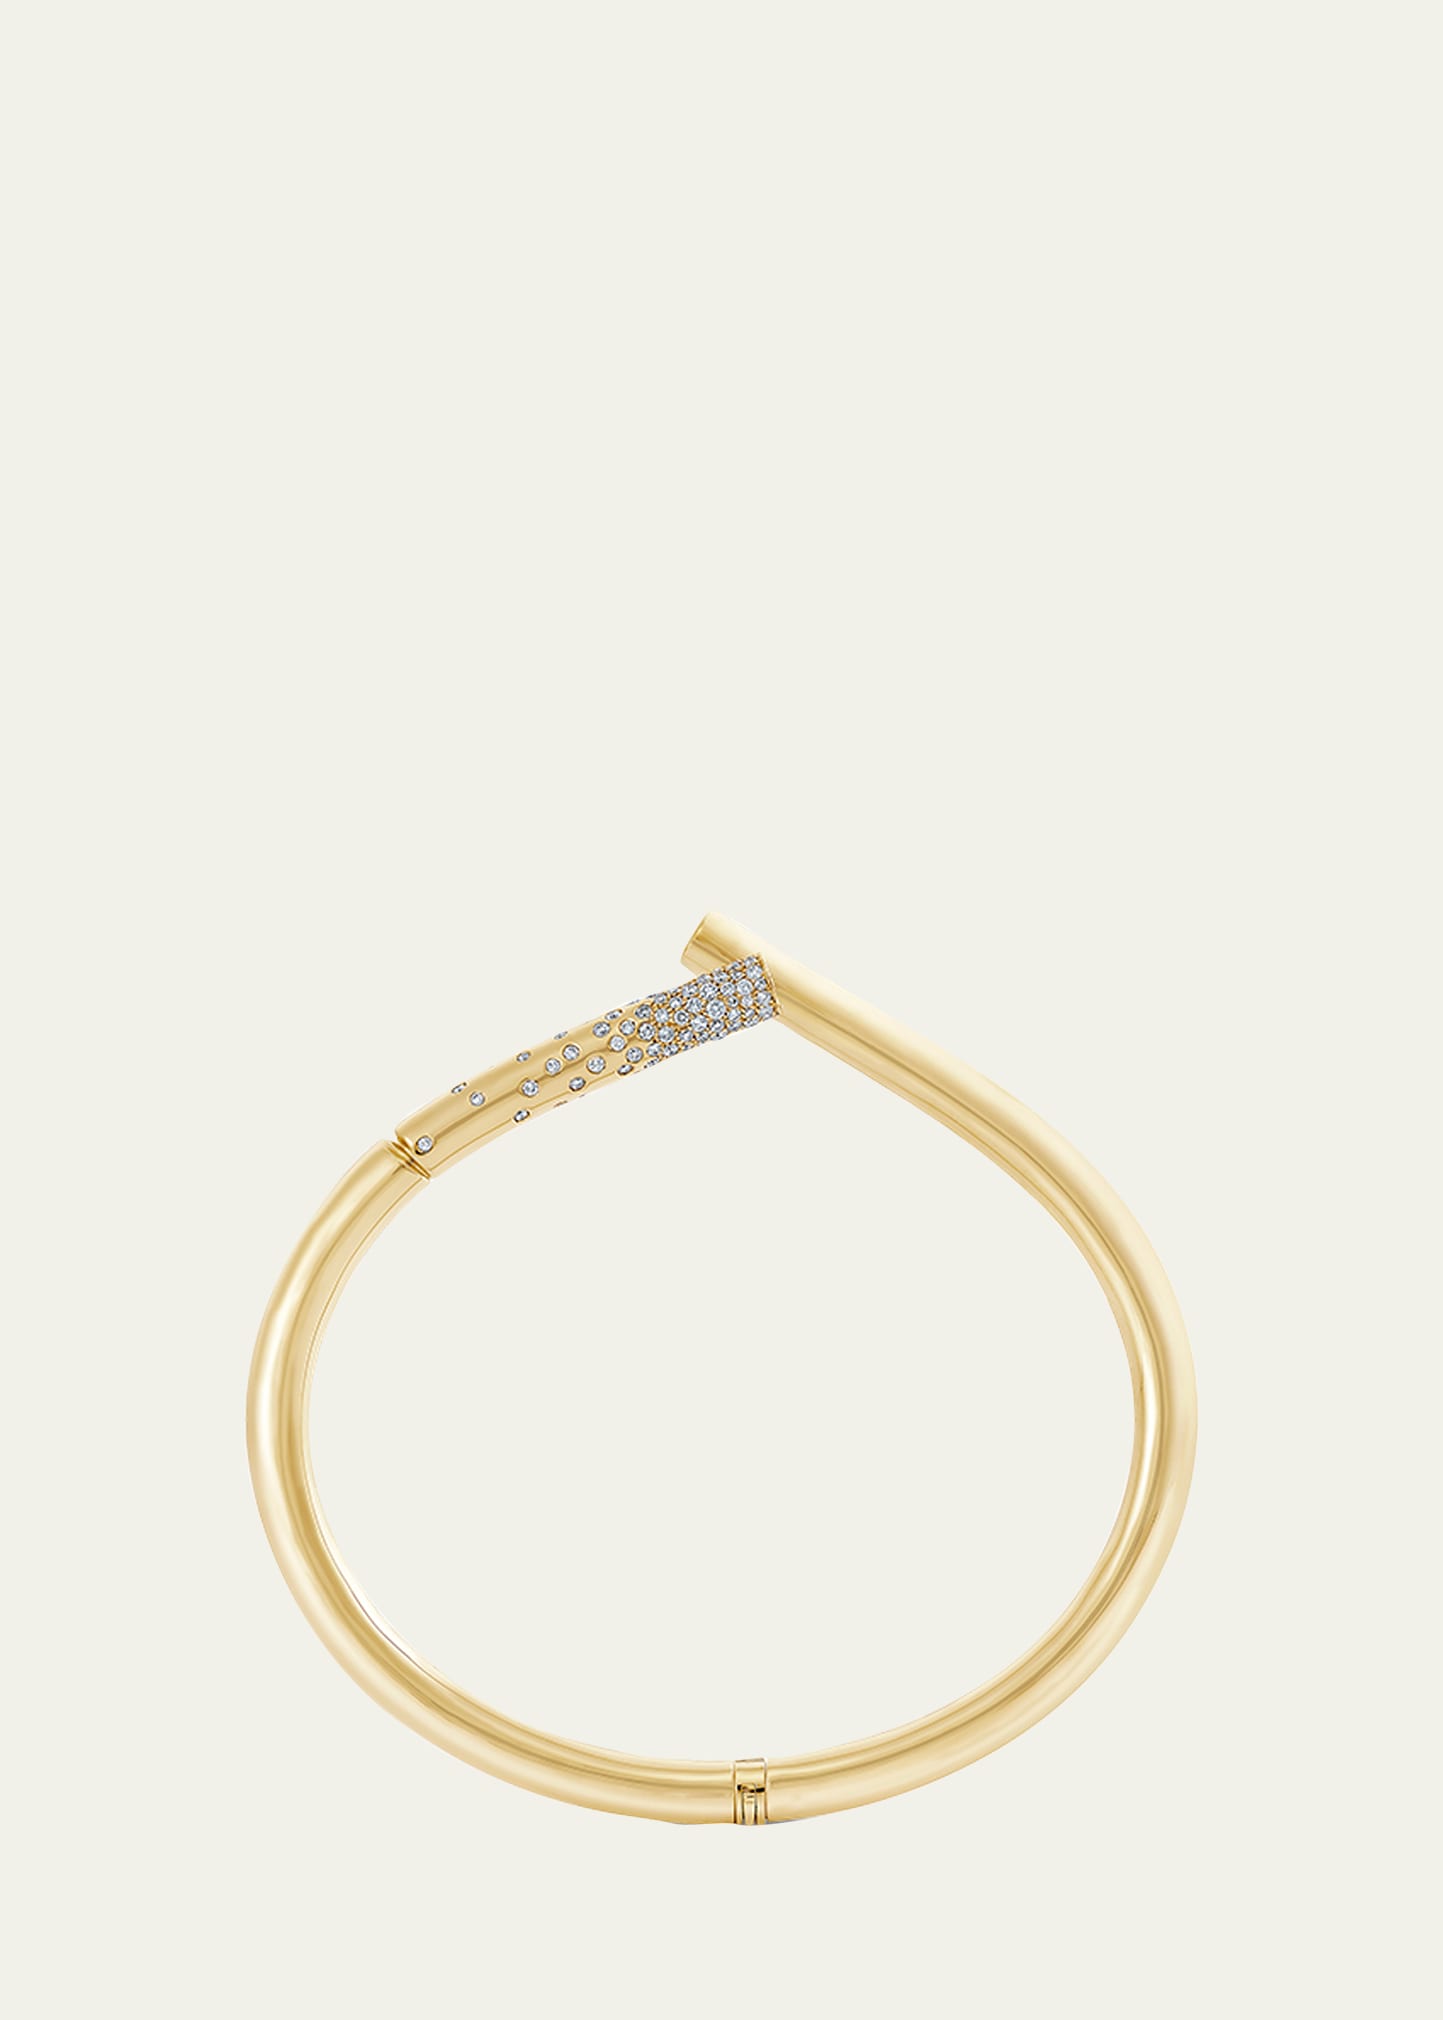 18k Fairmined Yellow Gold Bracelet with Diamonds